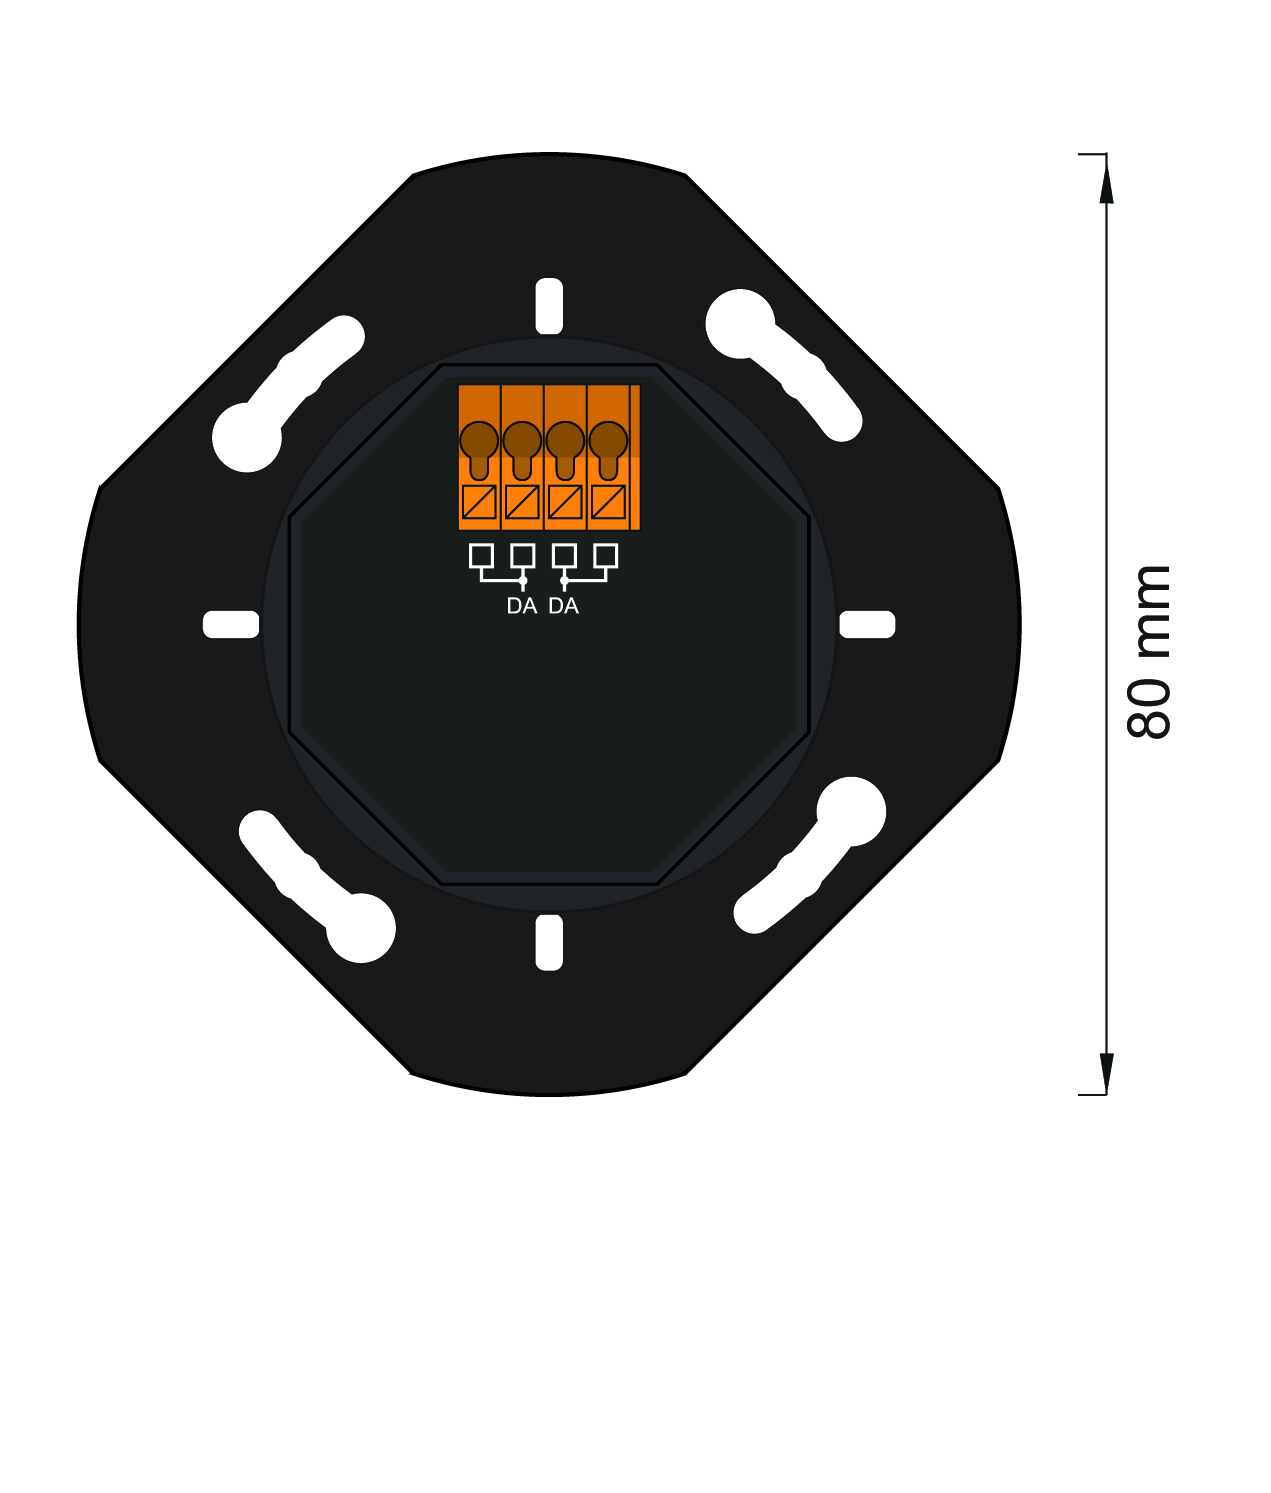 Lunatone rotary knob DALI-2 ROT NFC – 86459822-NFC